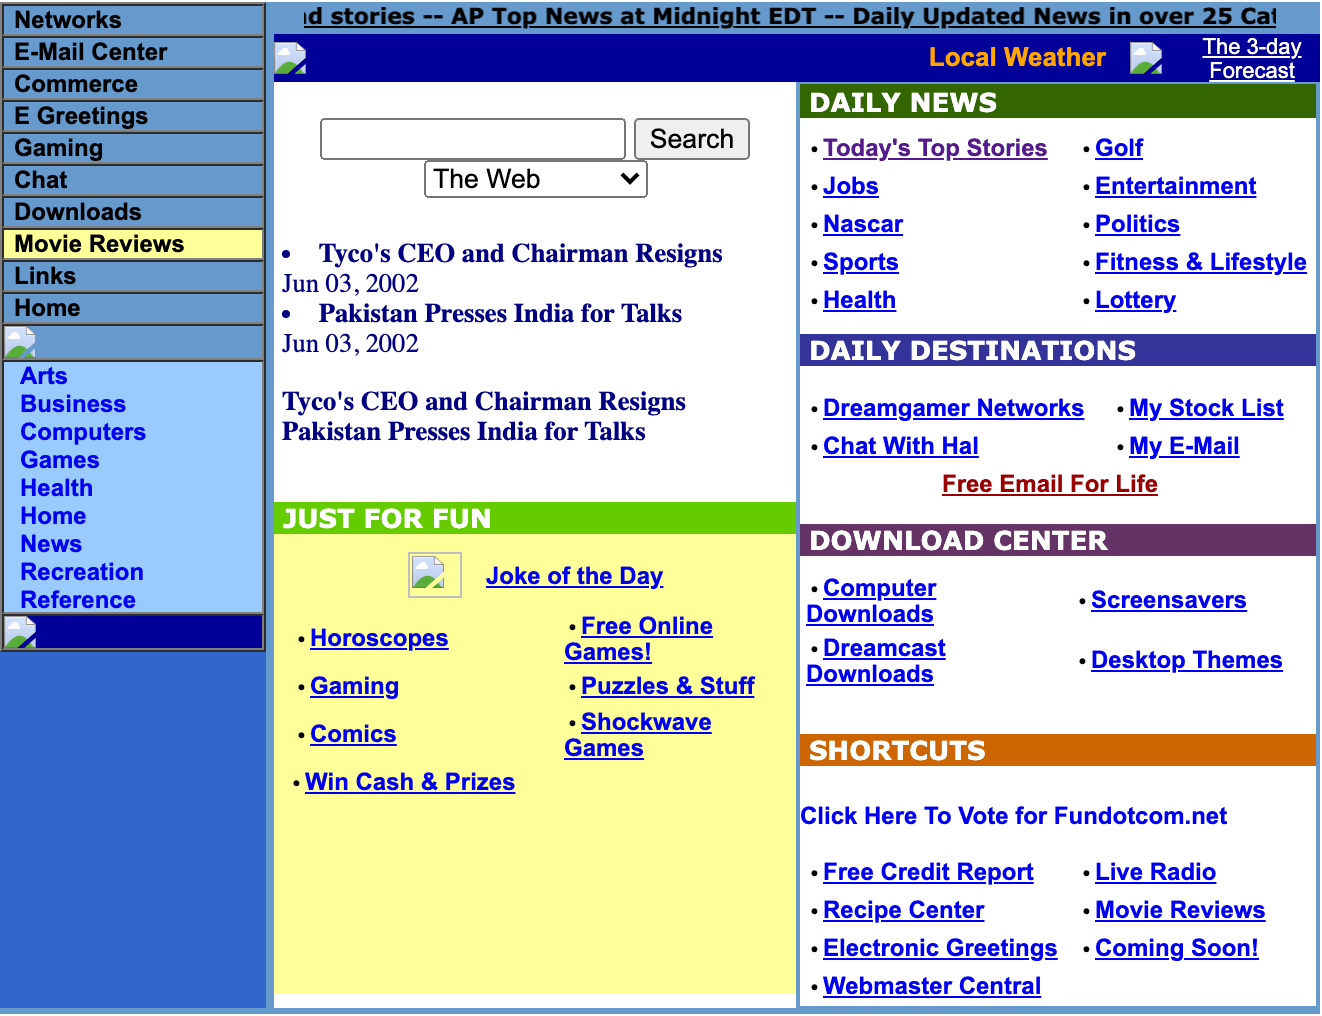 Fundotcom.net, 1999-2001